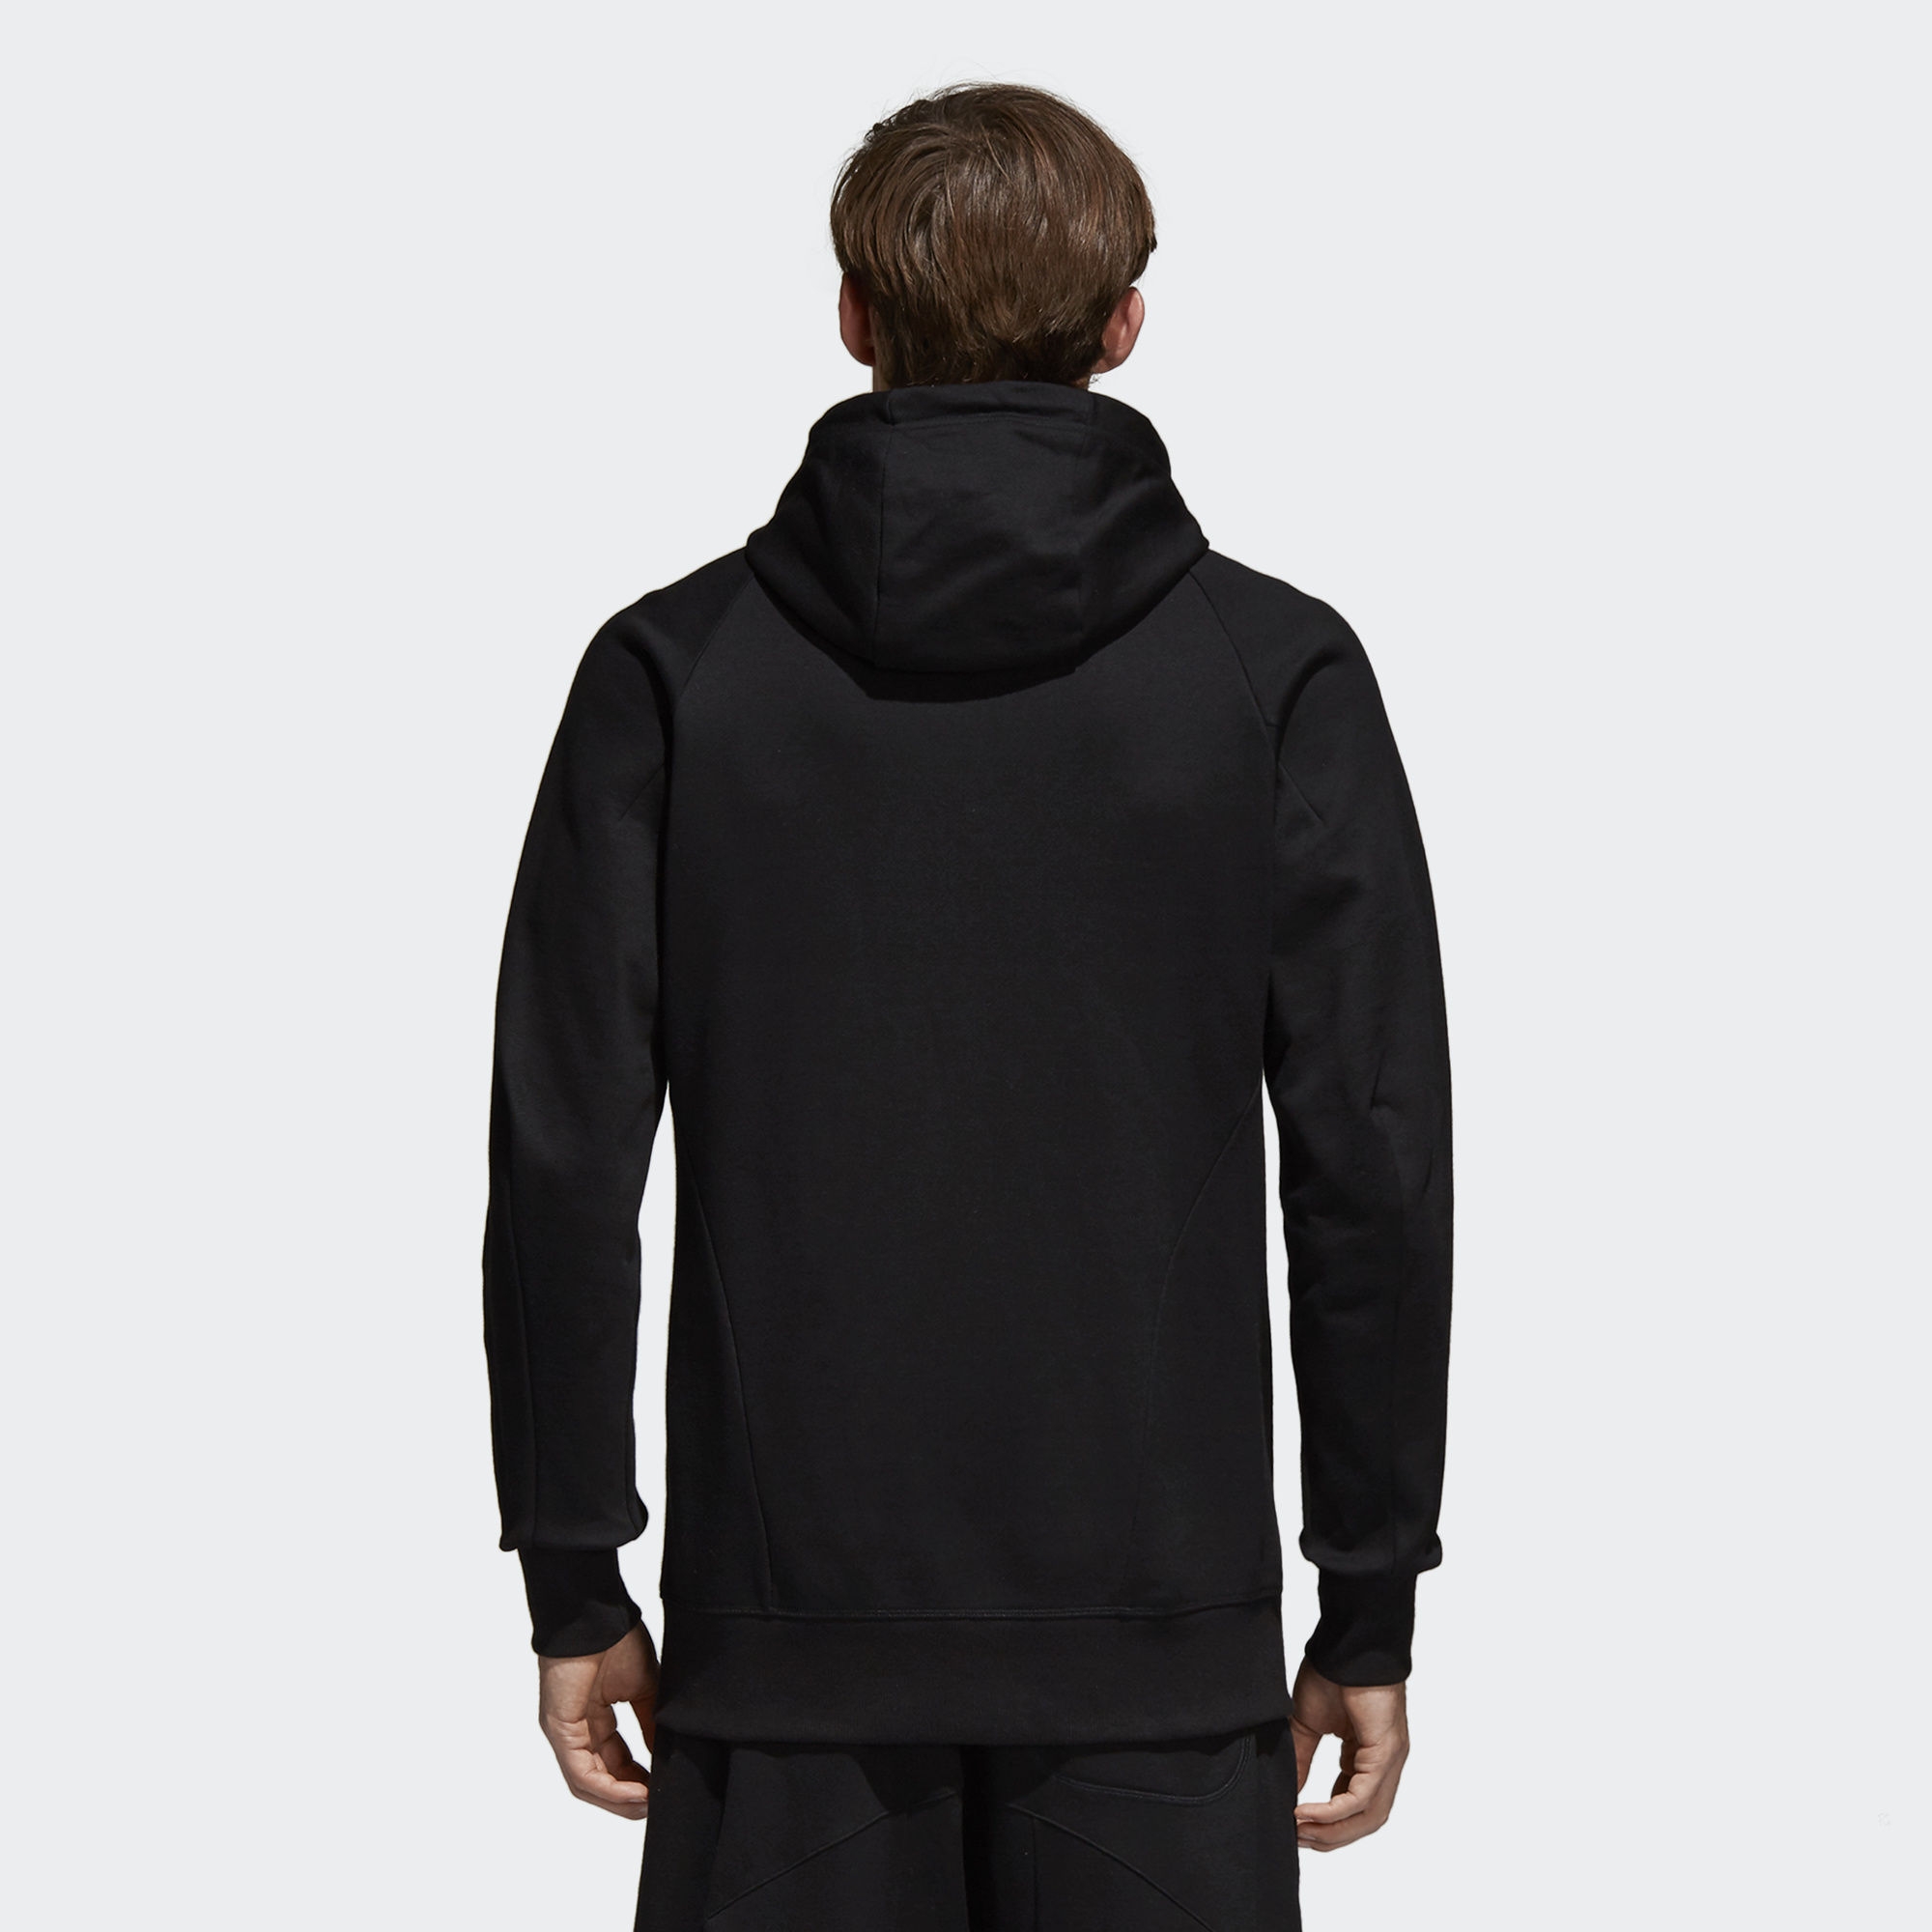 Adidas Originals x XBYO black hoodie